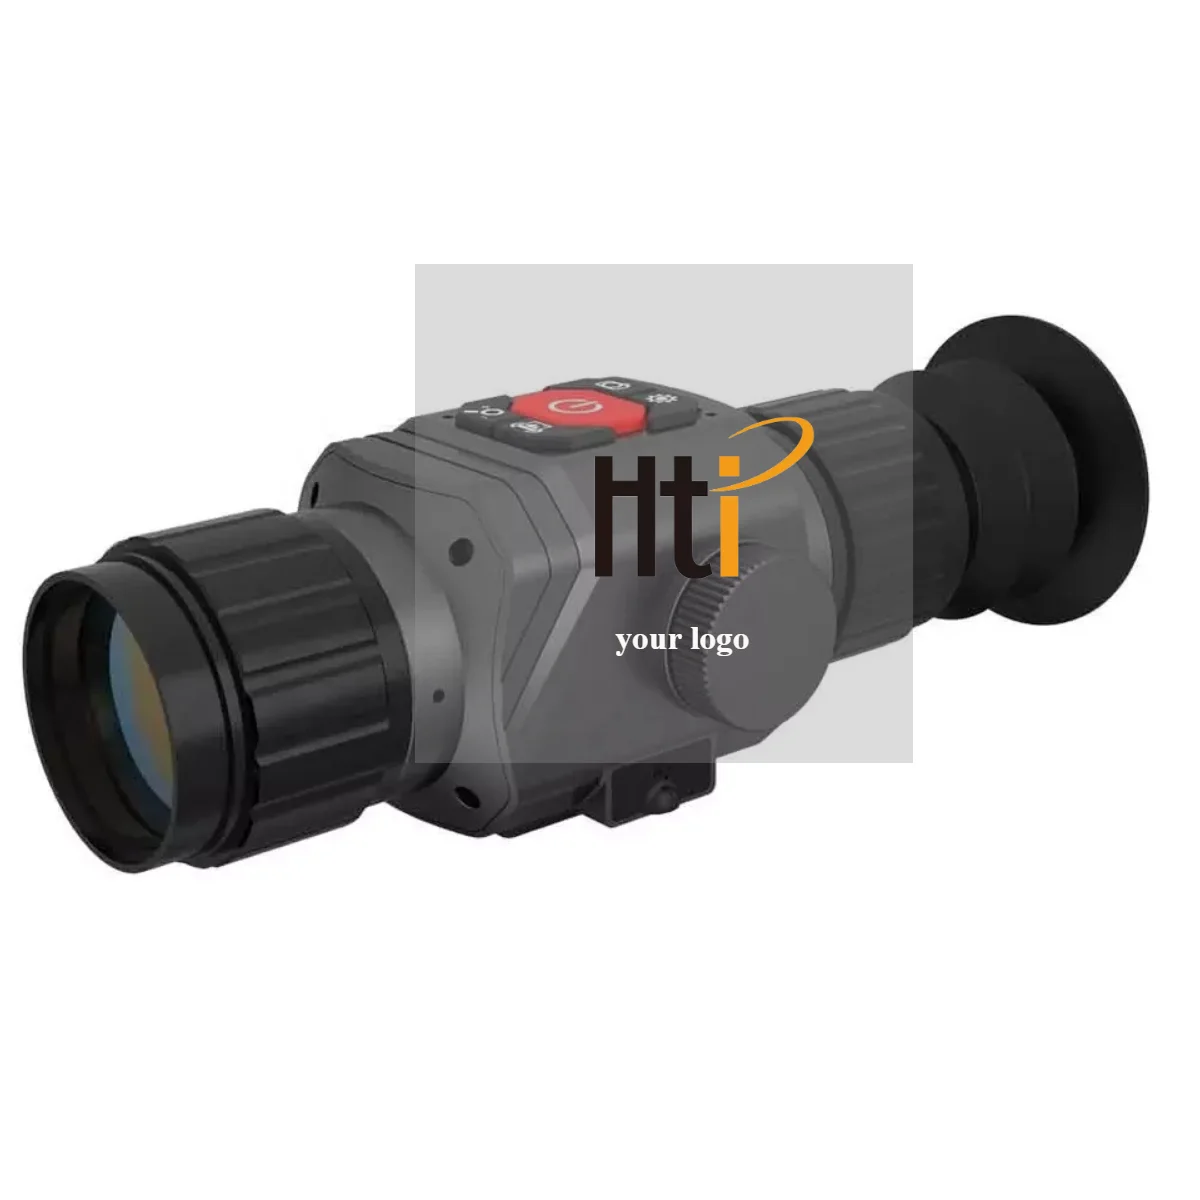 

Xintai Hti Ht-c8 New 2021 Outdoor Hunting imaging spotting scope night vision thermal scope riflescope monocular telescope